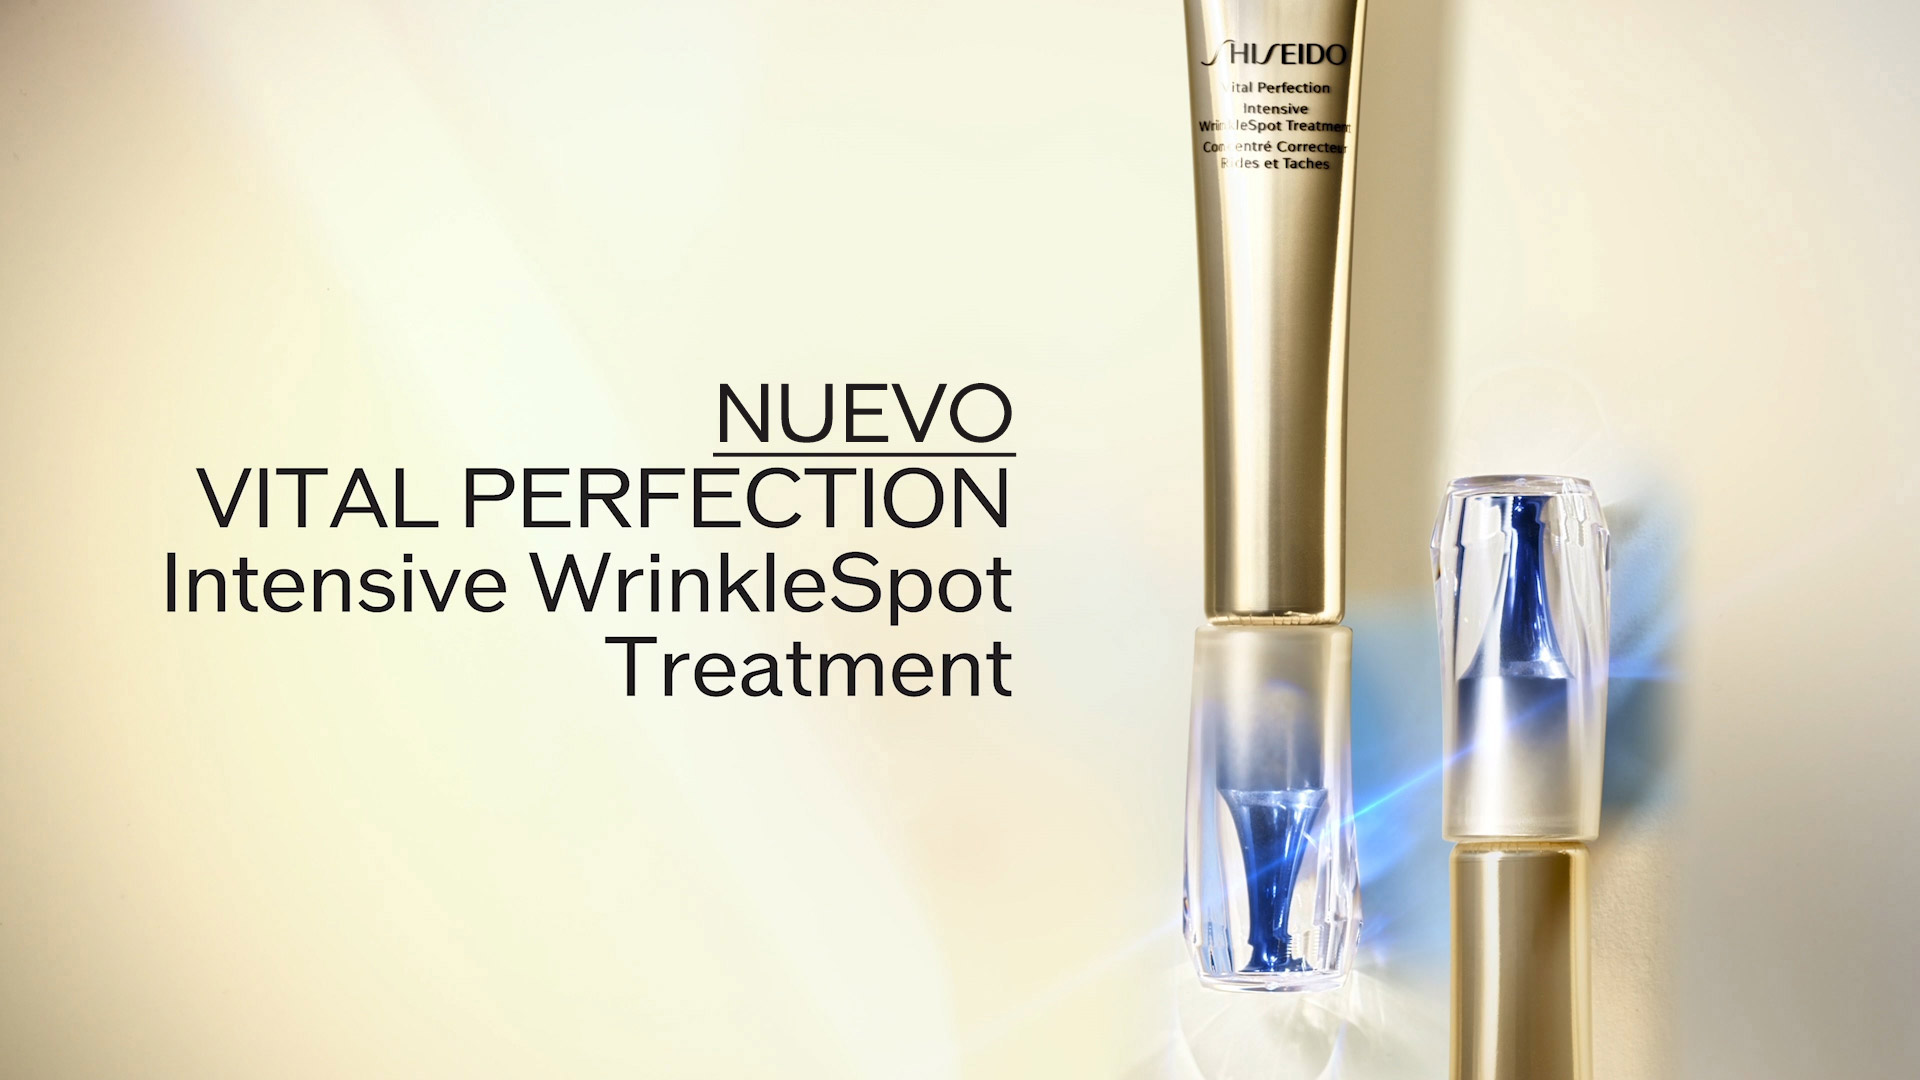 NUEVO Vital Perfection Intensive WrinkleSpot Treatment